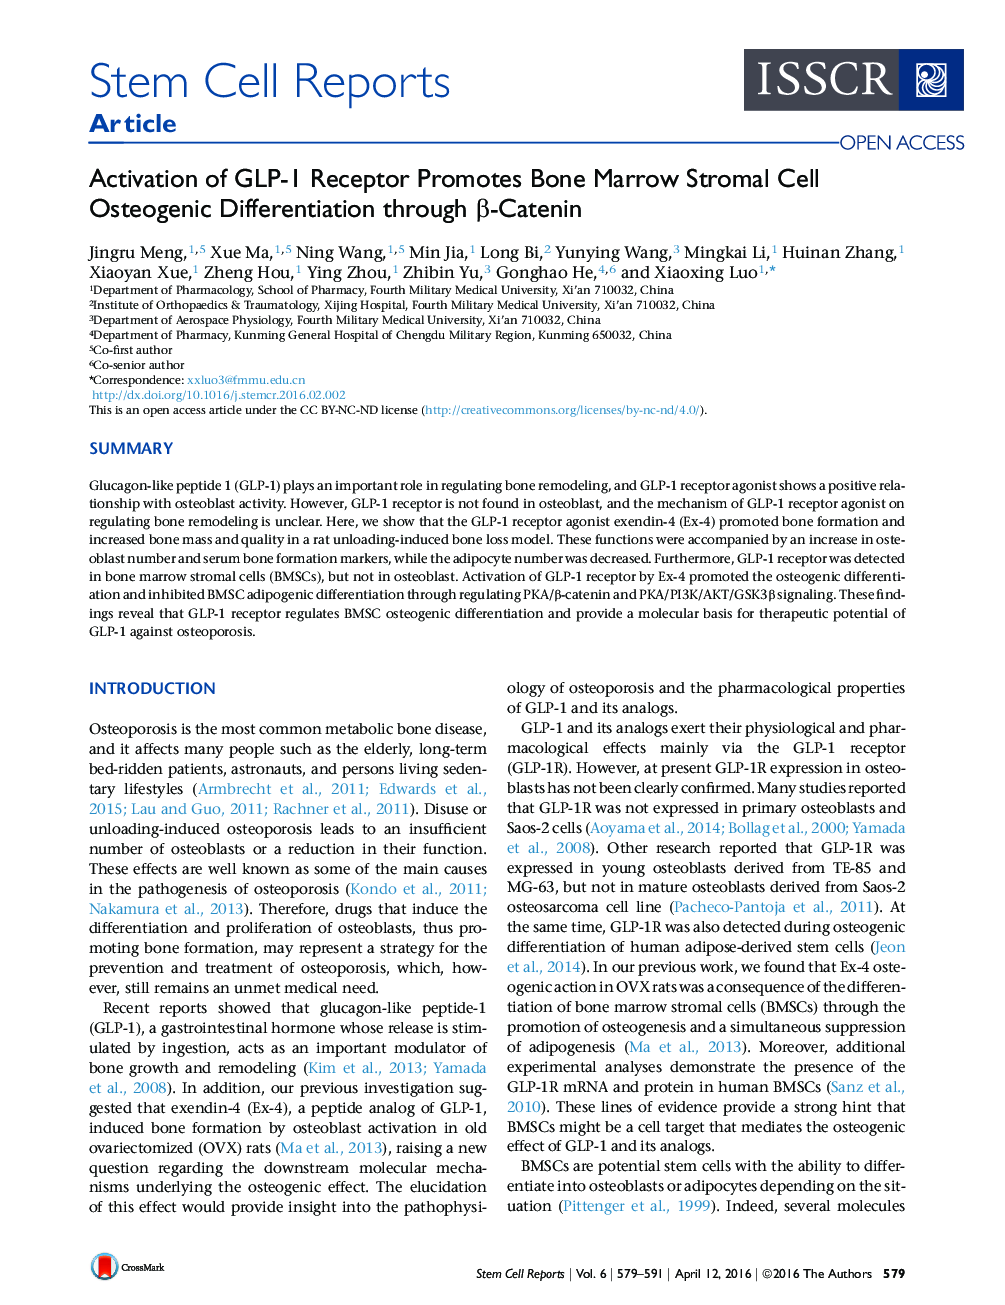 Activation of GLP-1 Receptor Promotes Bone Marrow Stromal Cell Osteogenic Differentiation through β-Catenin 